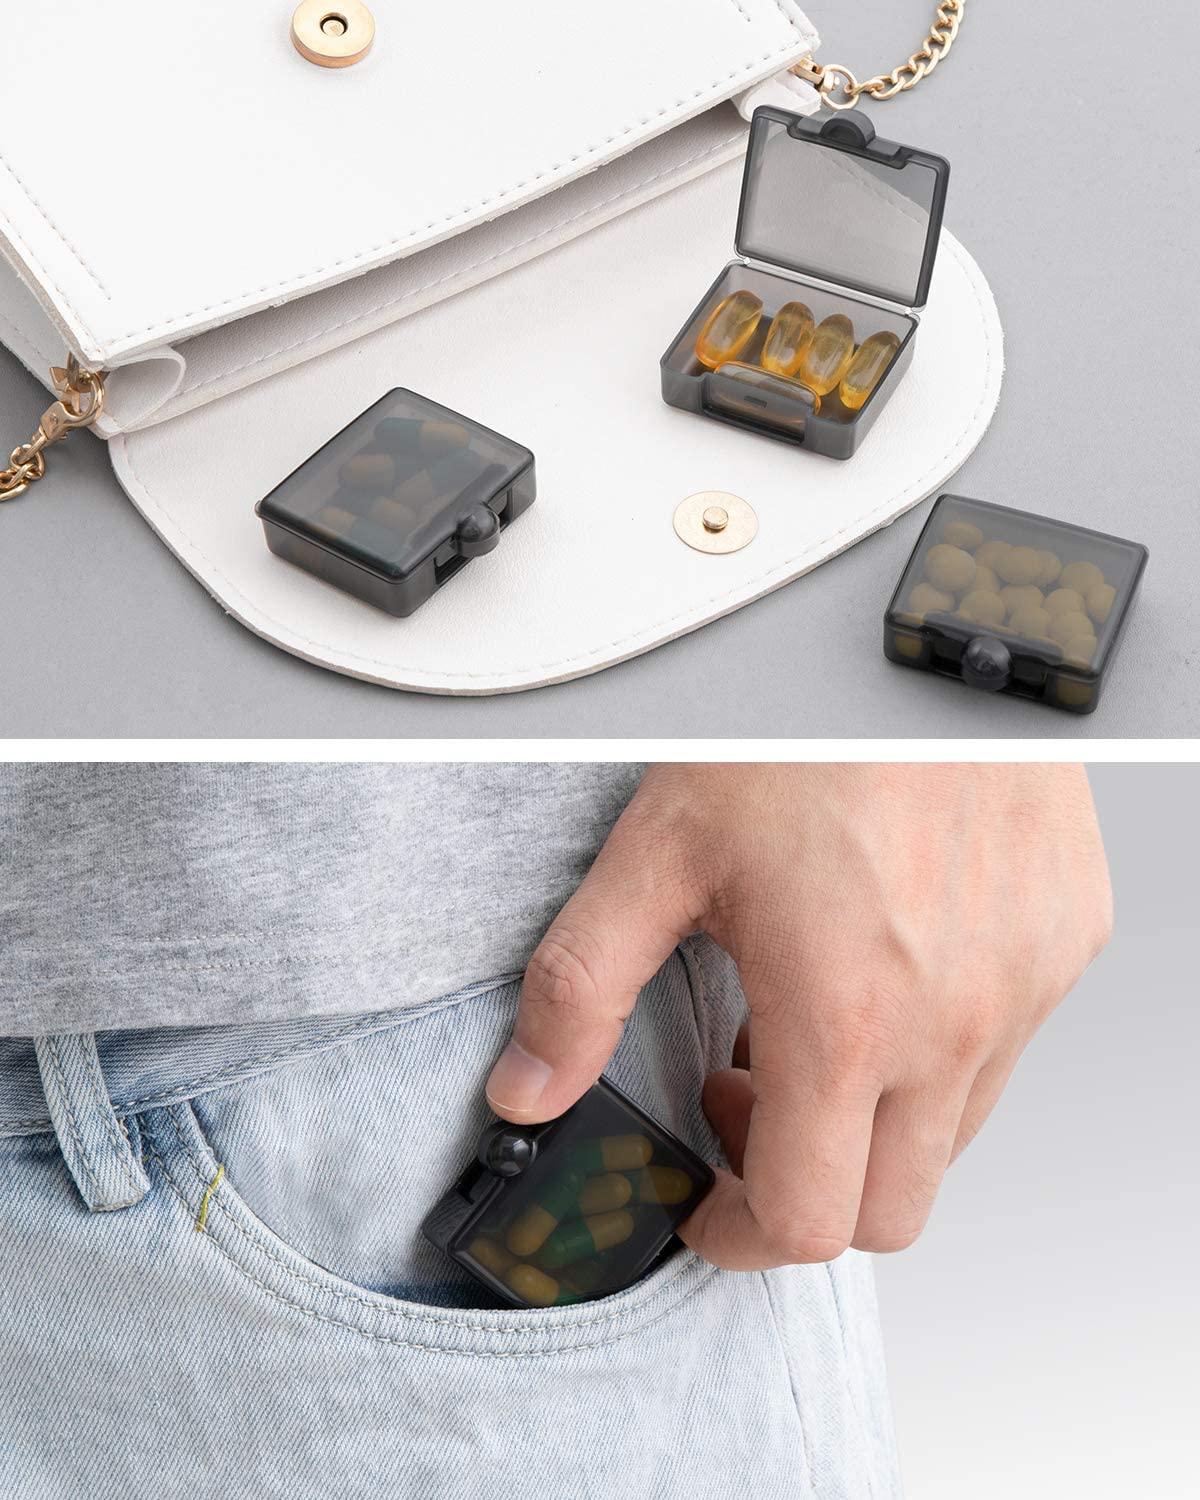 Opret Small Pill Box (3 Pcs), Cute Pill Case Portable for Pocket Purse  Briefcase Travel Pills Box Medicine Storage Container Earplug Case